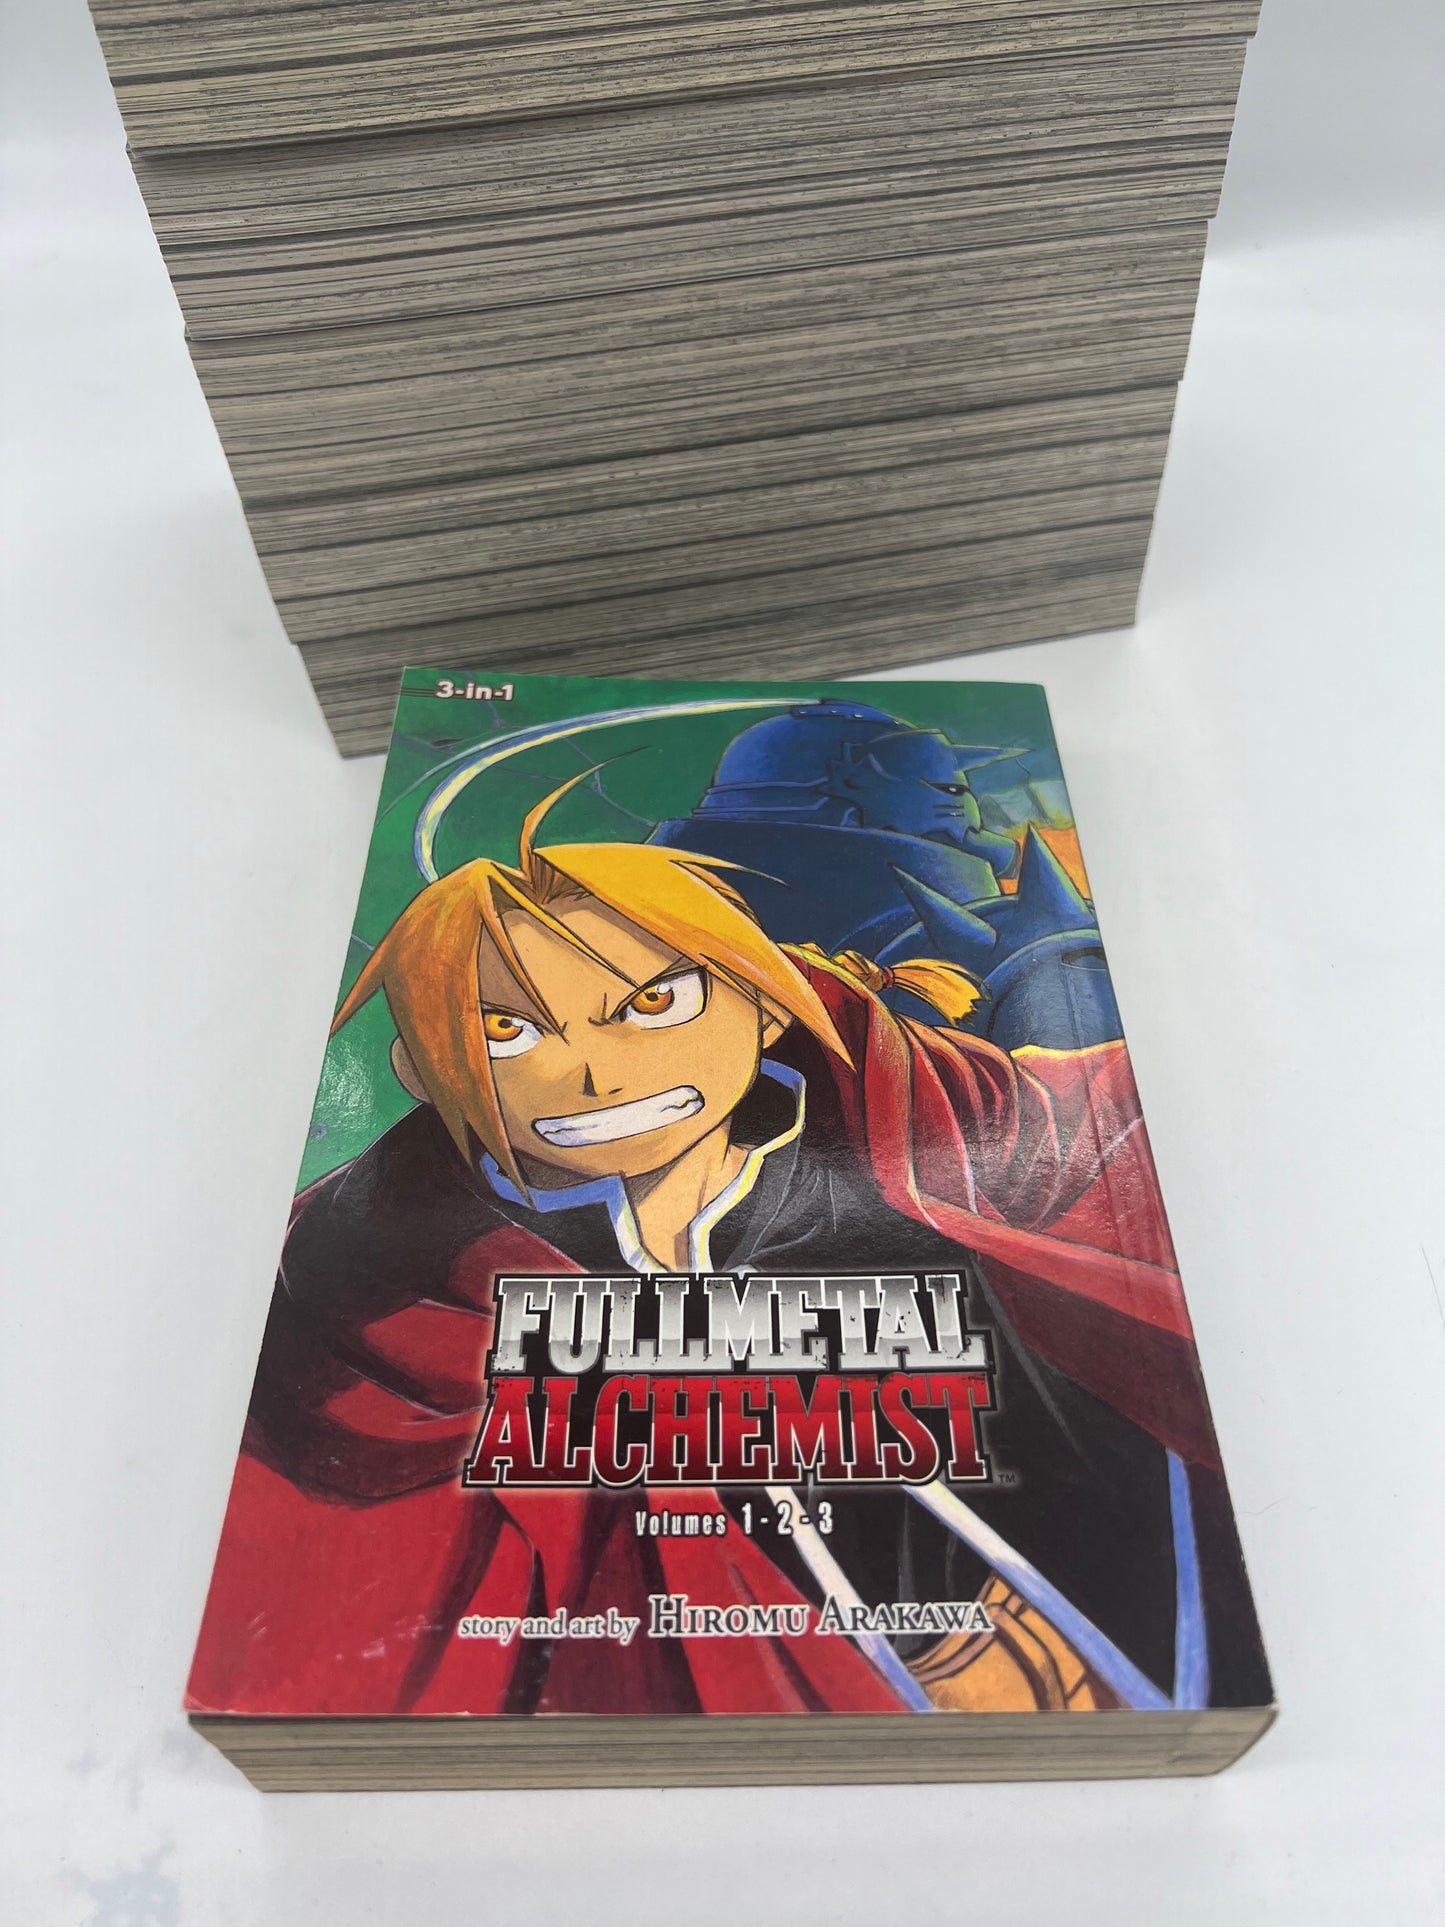 Fullmetal Alchemist 3 in 1 Manga Volumes 1-9 (1-27)